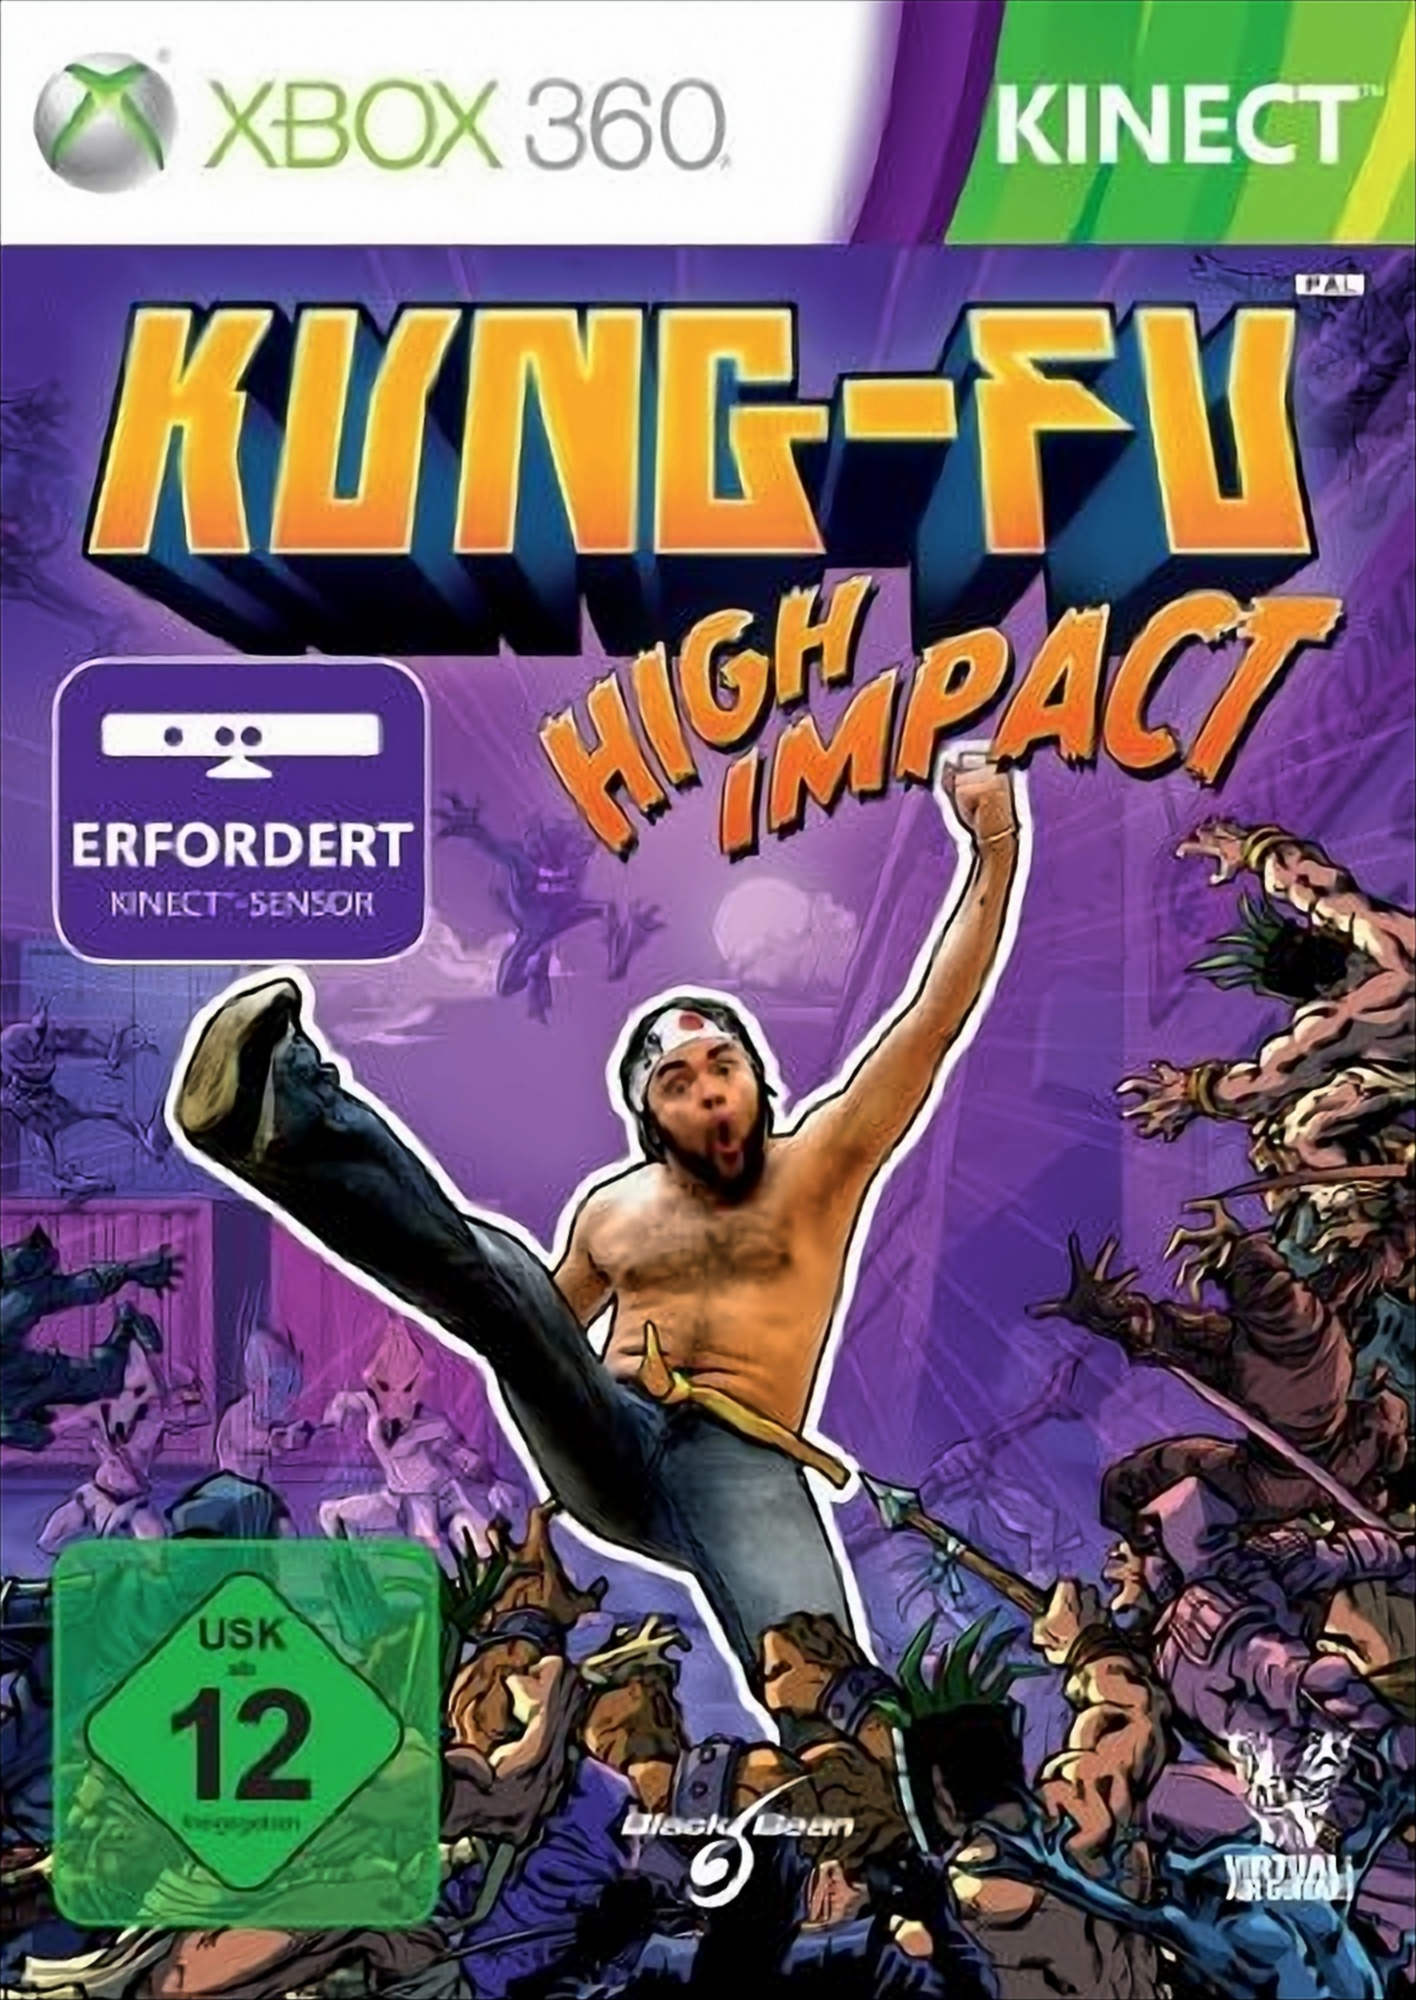 Kung-Fu High Impact - [Xbox 360